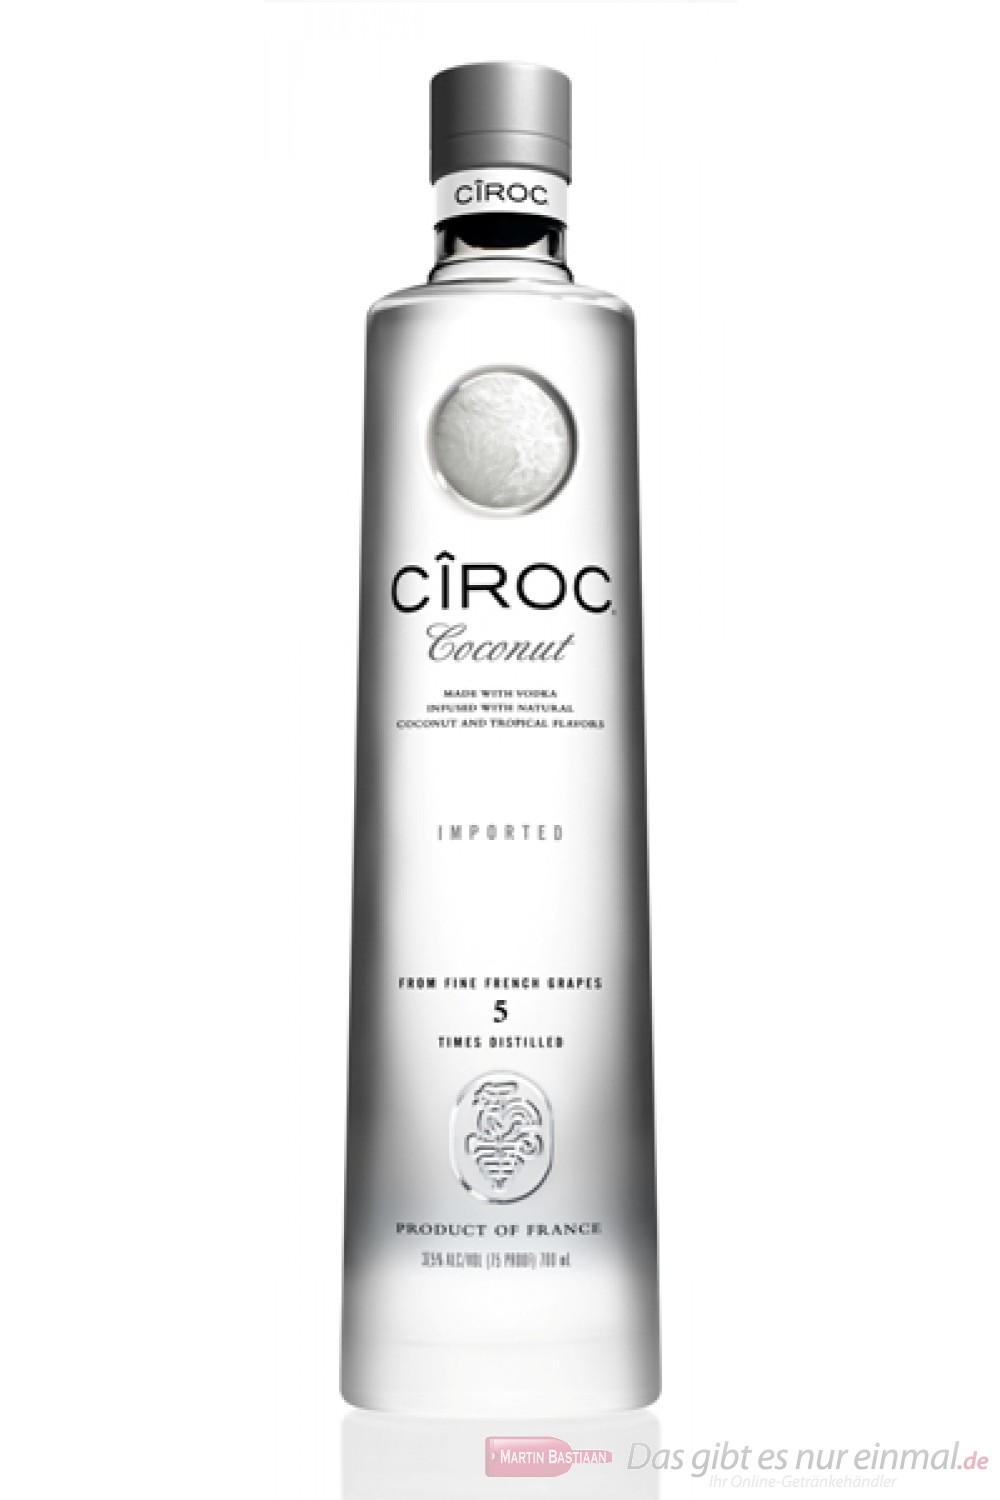 Ciroc Coconut Infused Vodka